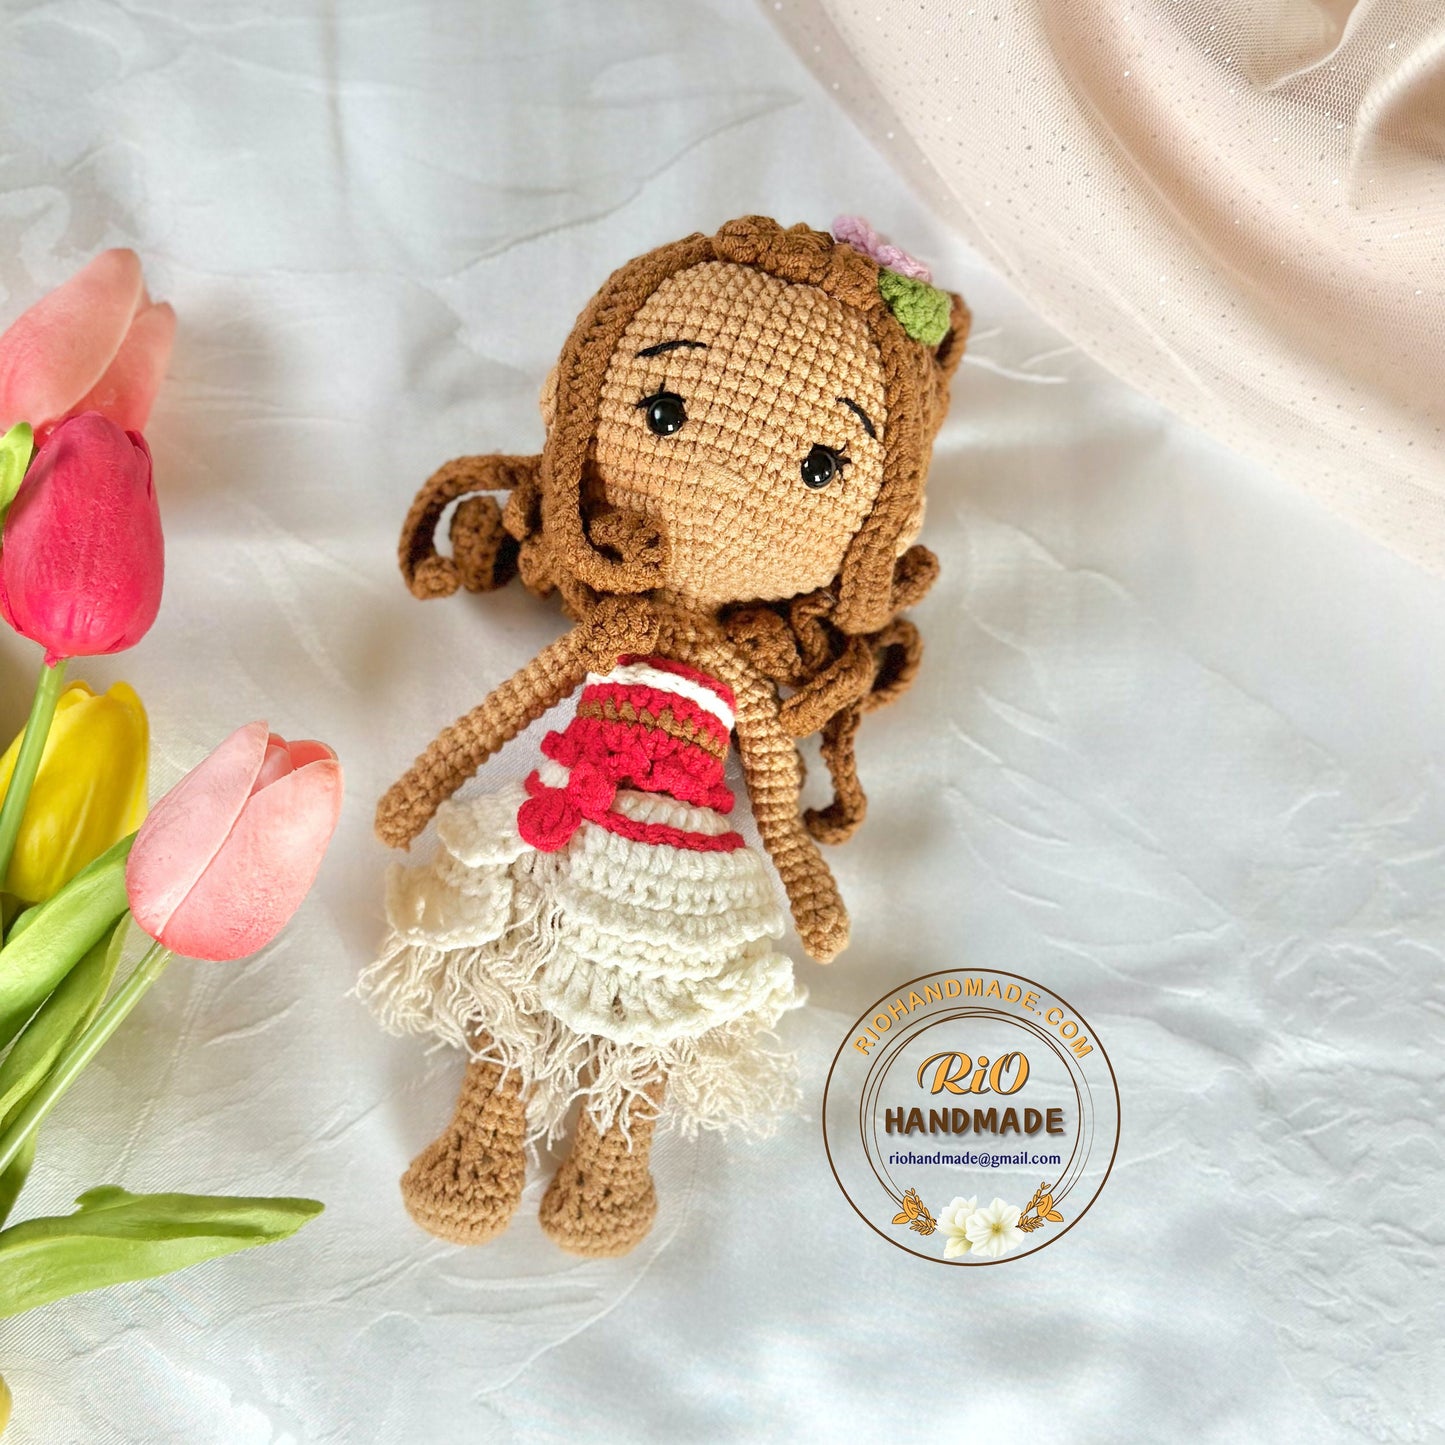 Handmade  small animator princess doll crochet, amigurumi doll, cute, toy for kid, adult hobby